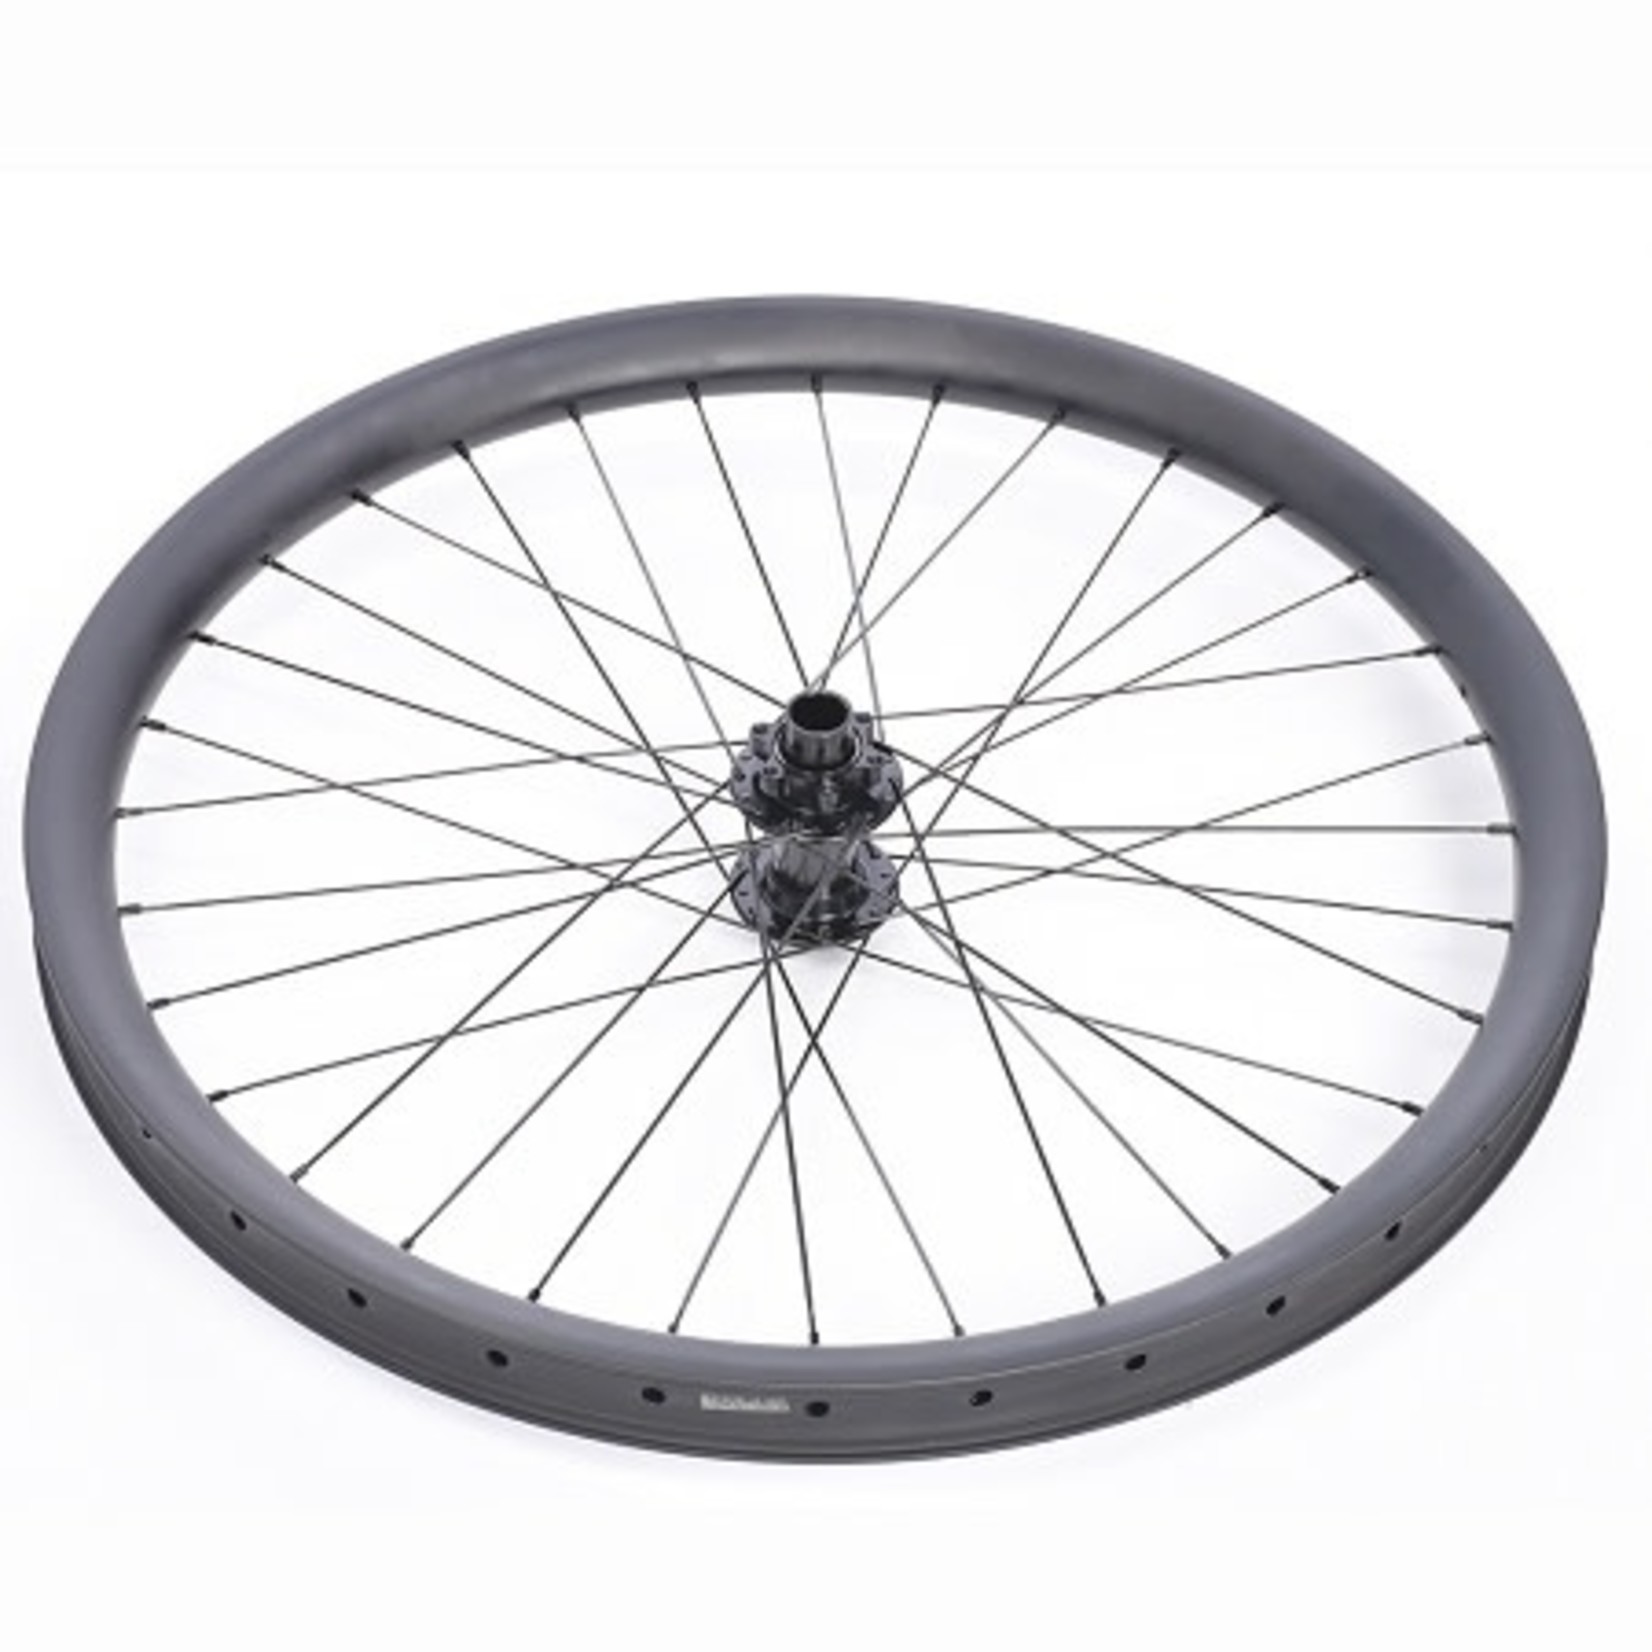 Custom Built Mountain bike wheels - Carbon - 27.5"/650b